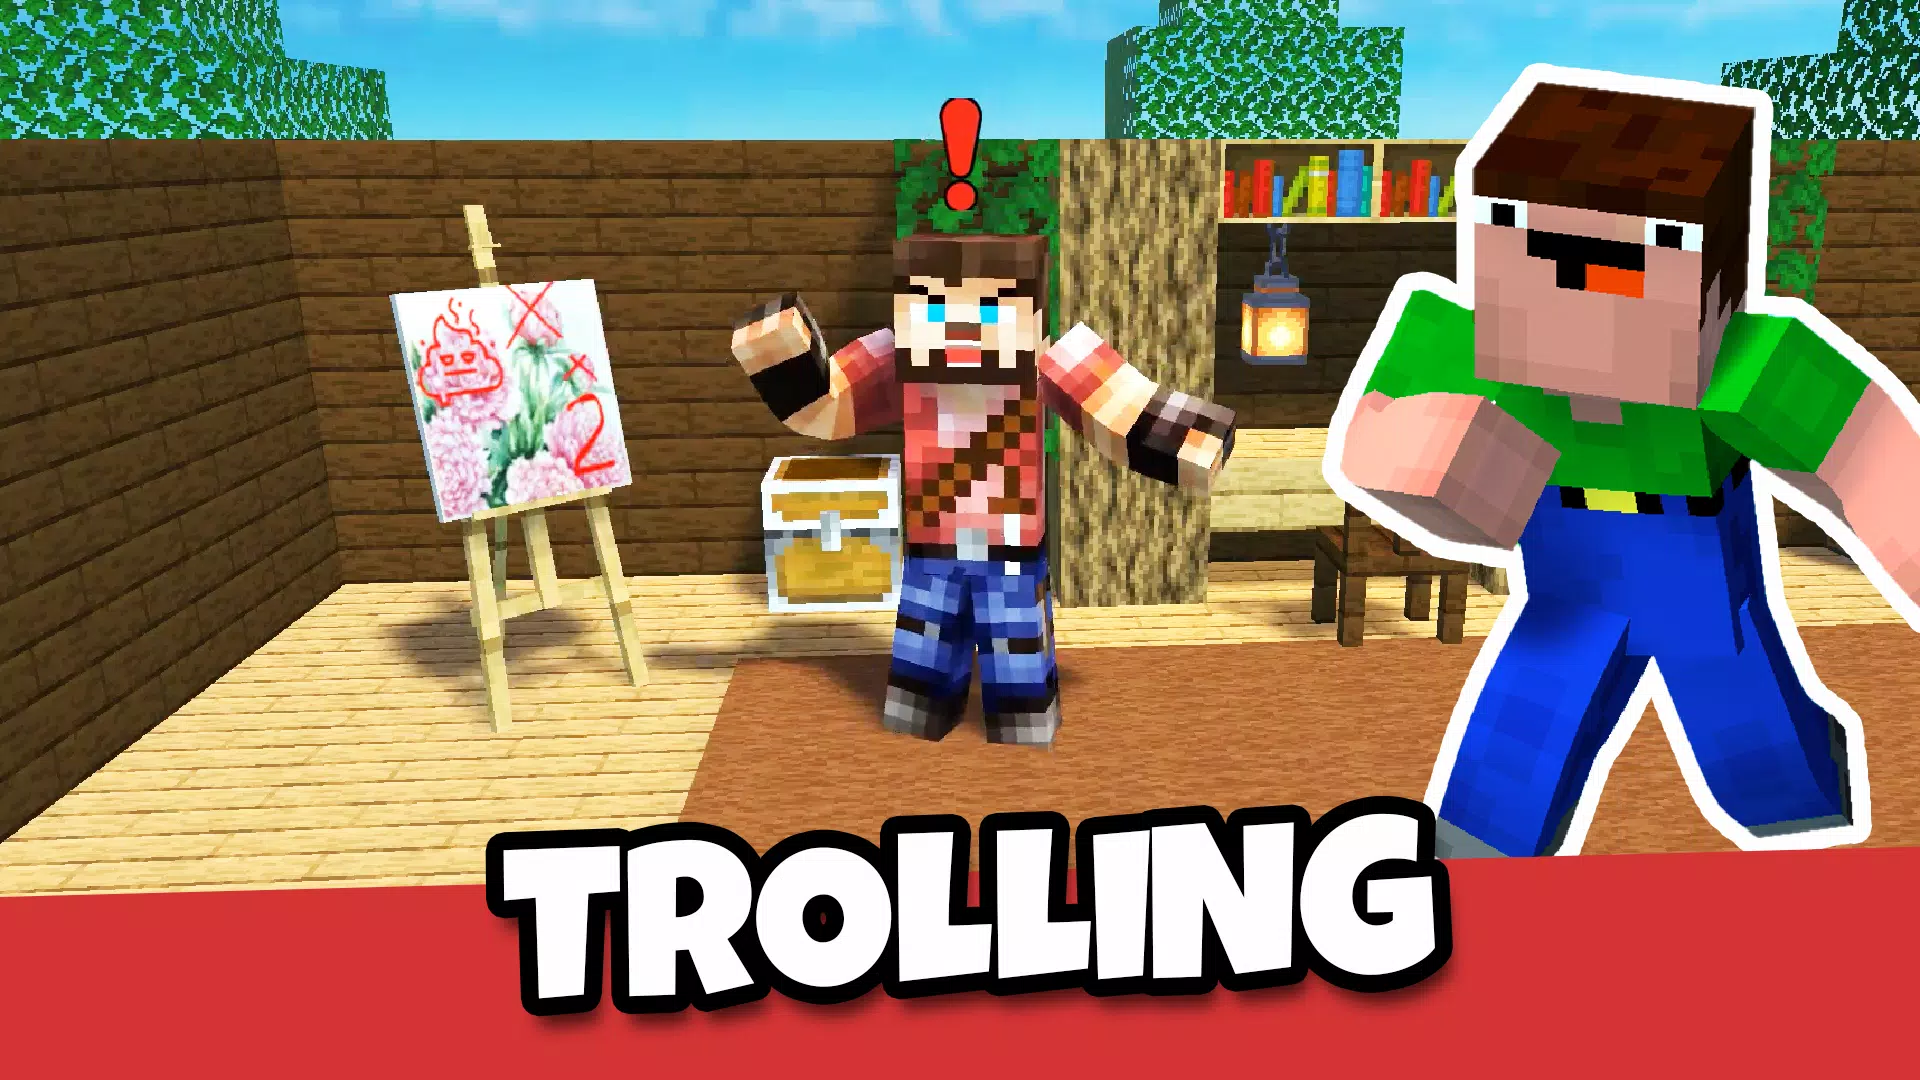 Noob Trolls Pro 🕹️ Play Now on GamePix